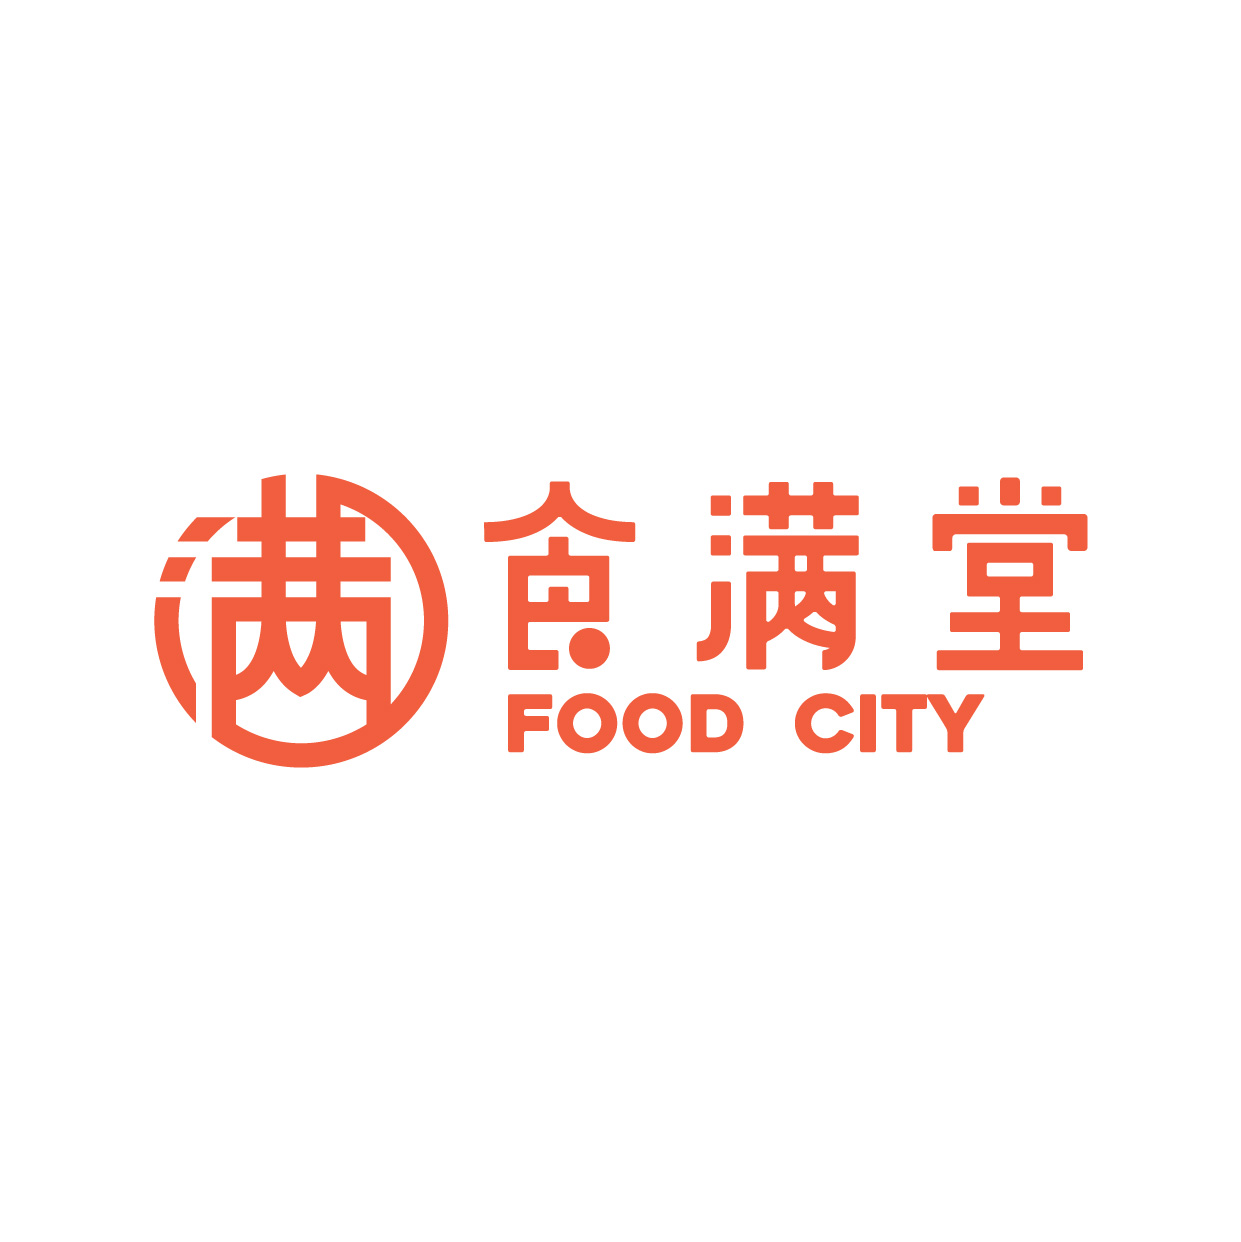 FOOD CITY